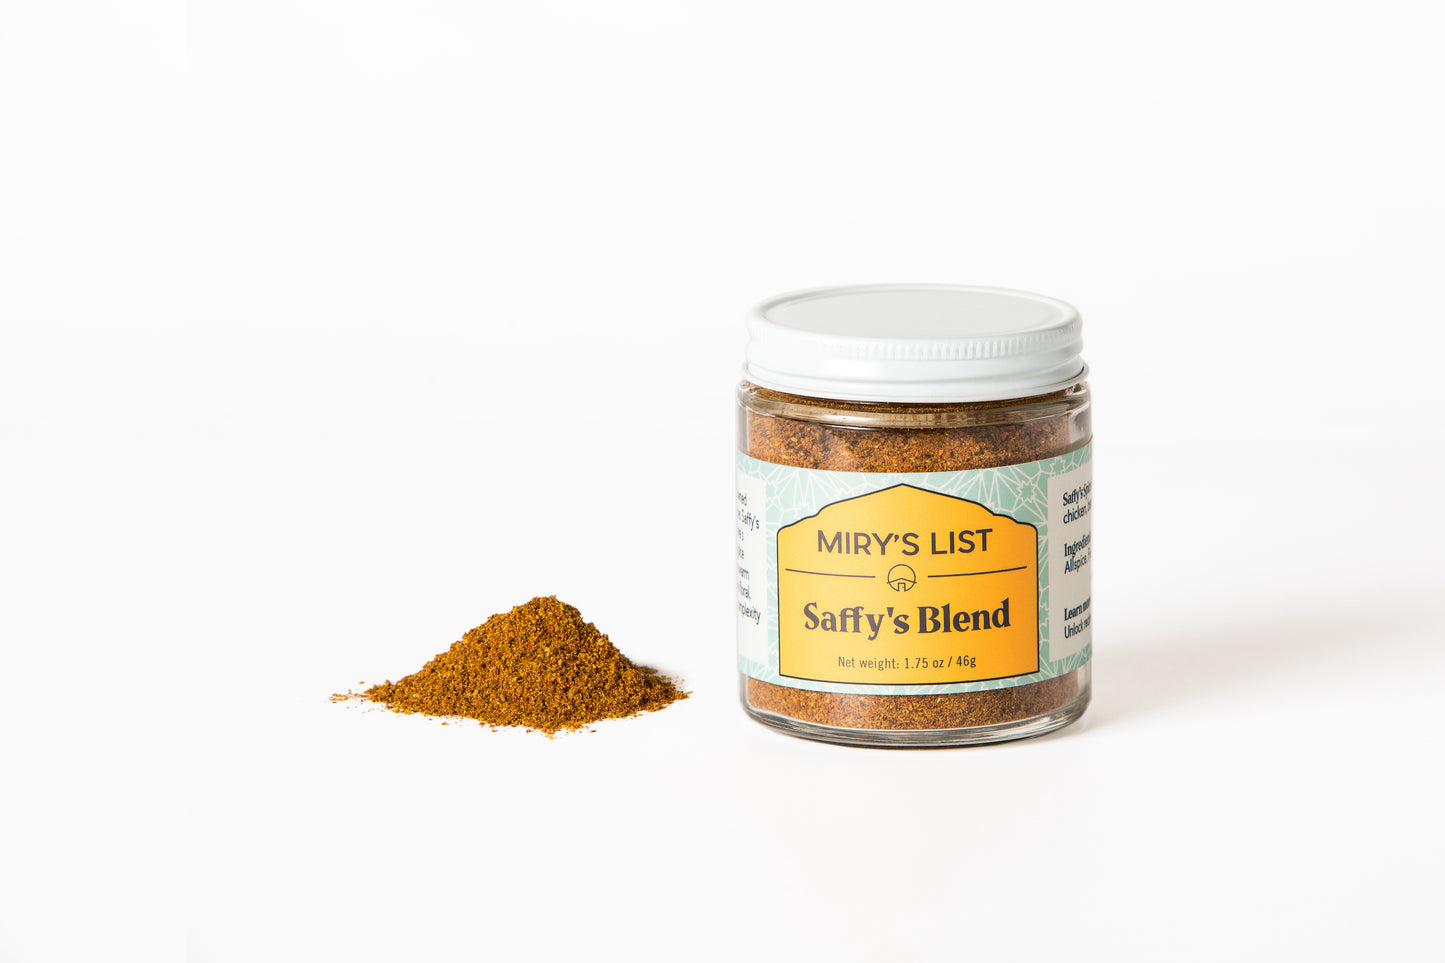 Miry's List X Saffy's Spice Kit